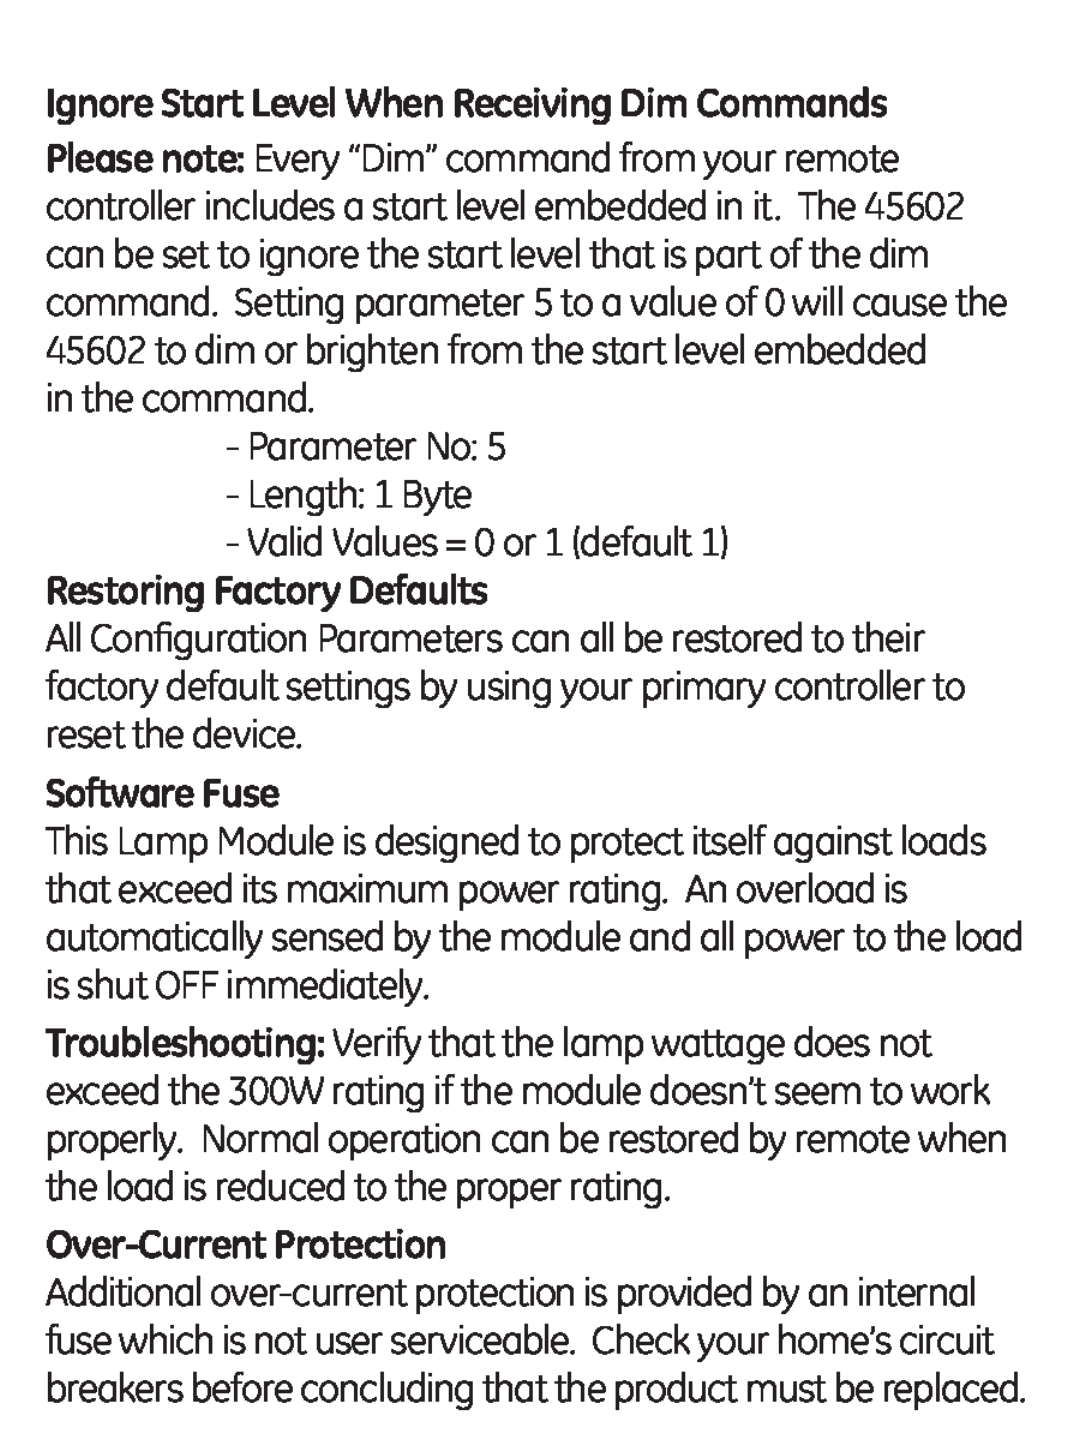 GE 45602 manual Restoring Factory Defaults, Software Fuse, Over-CurrentProtection 